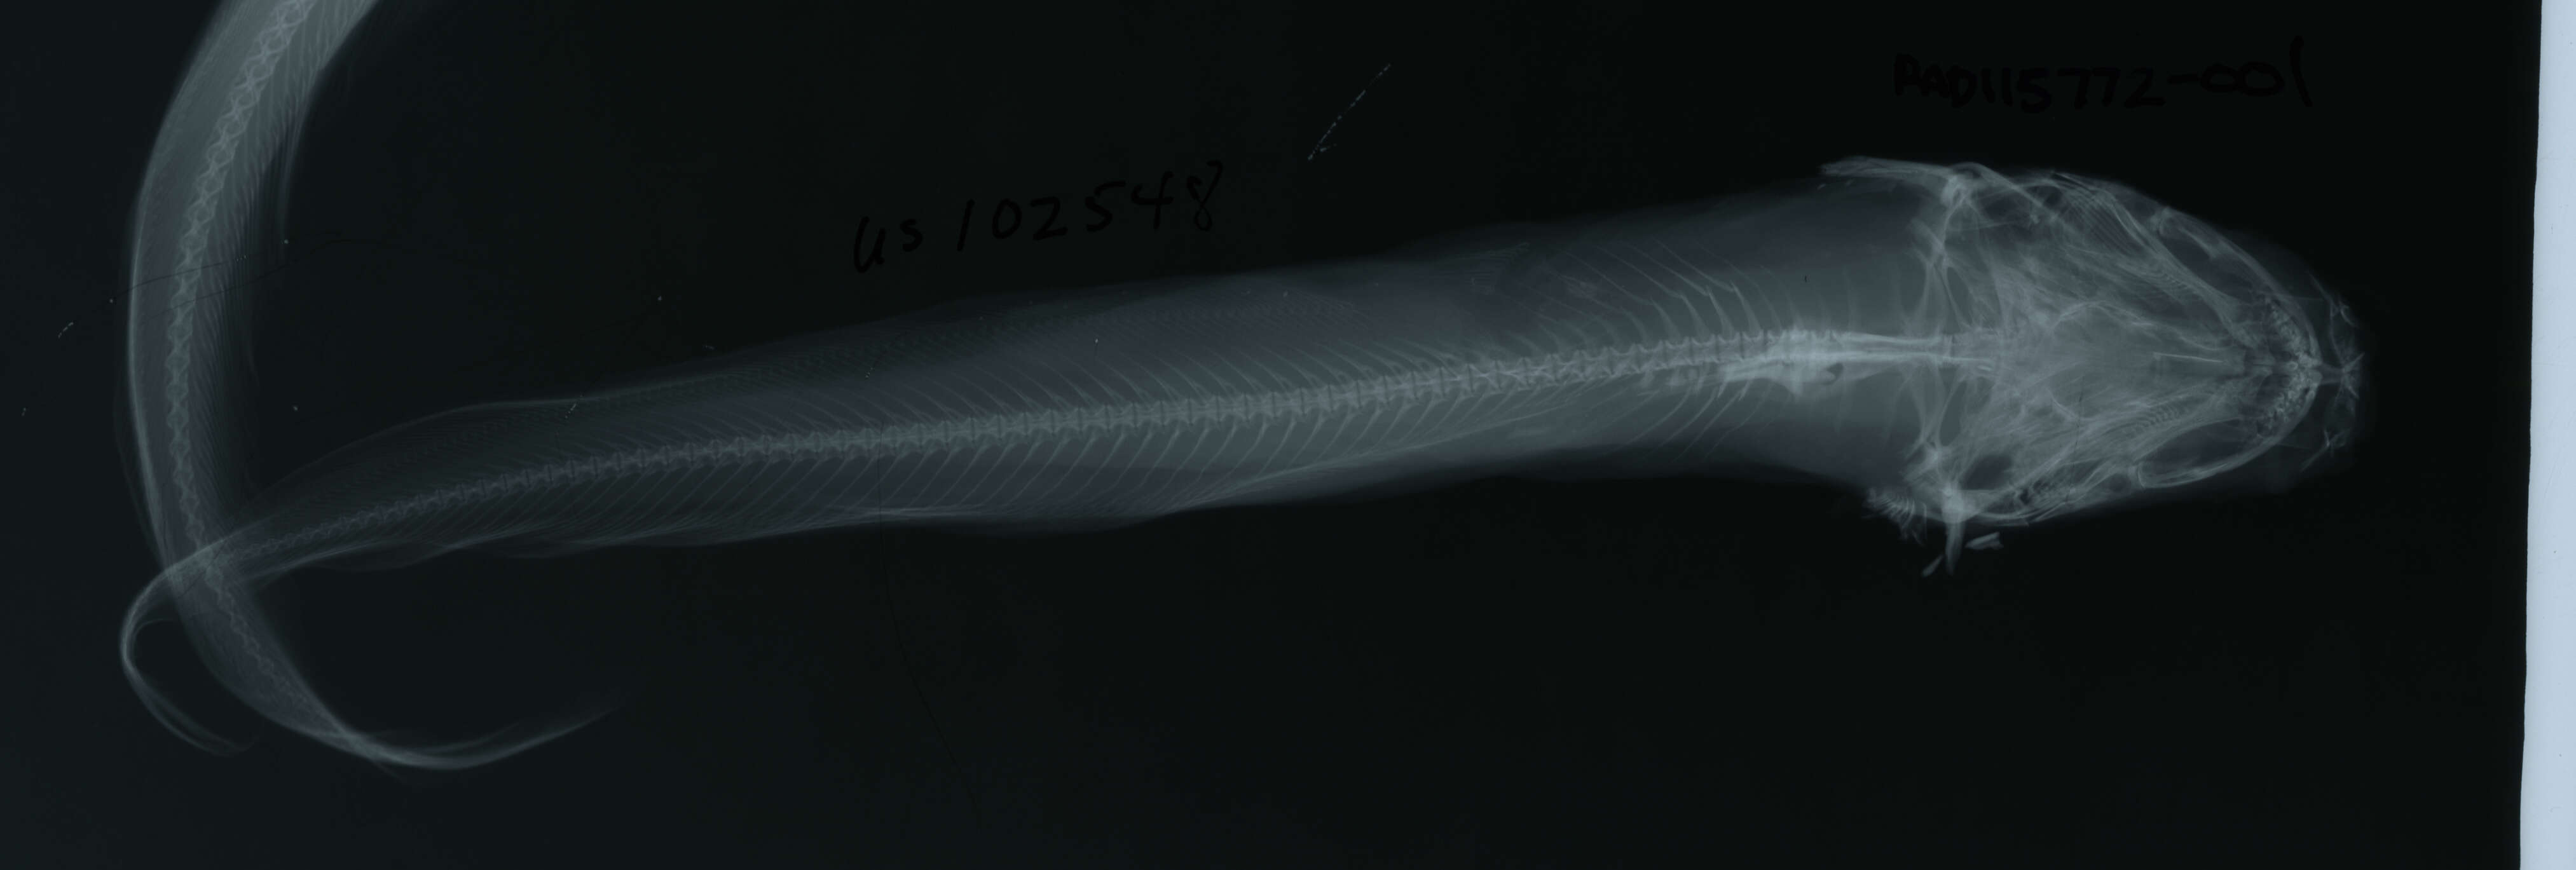 Image of Barbel-eel catfish